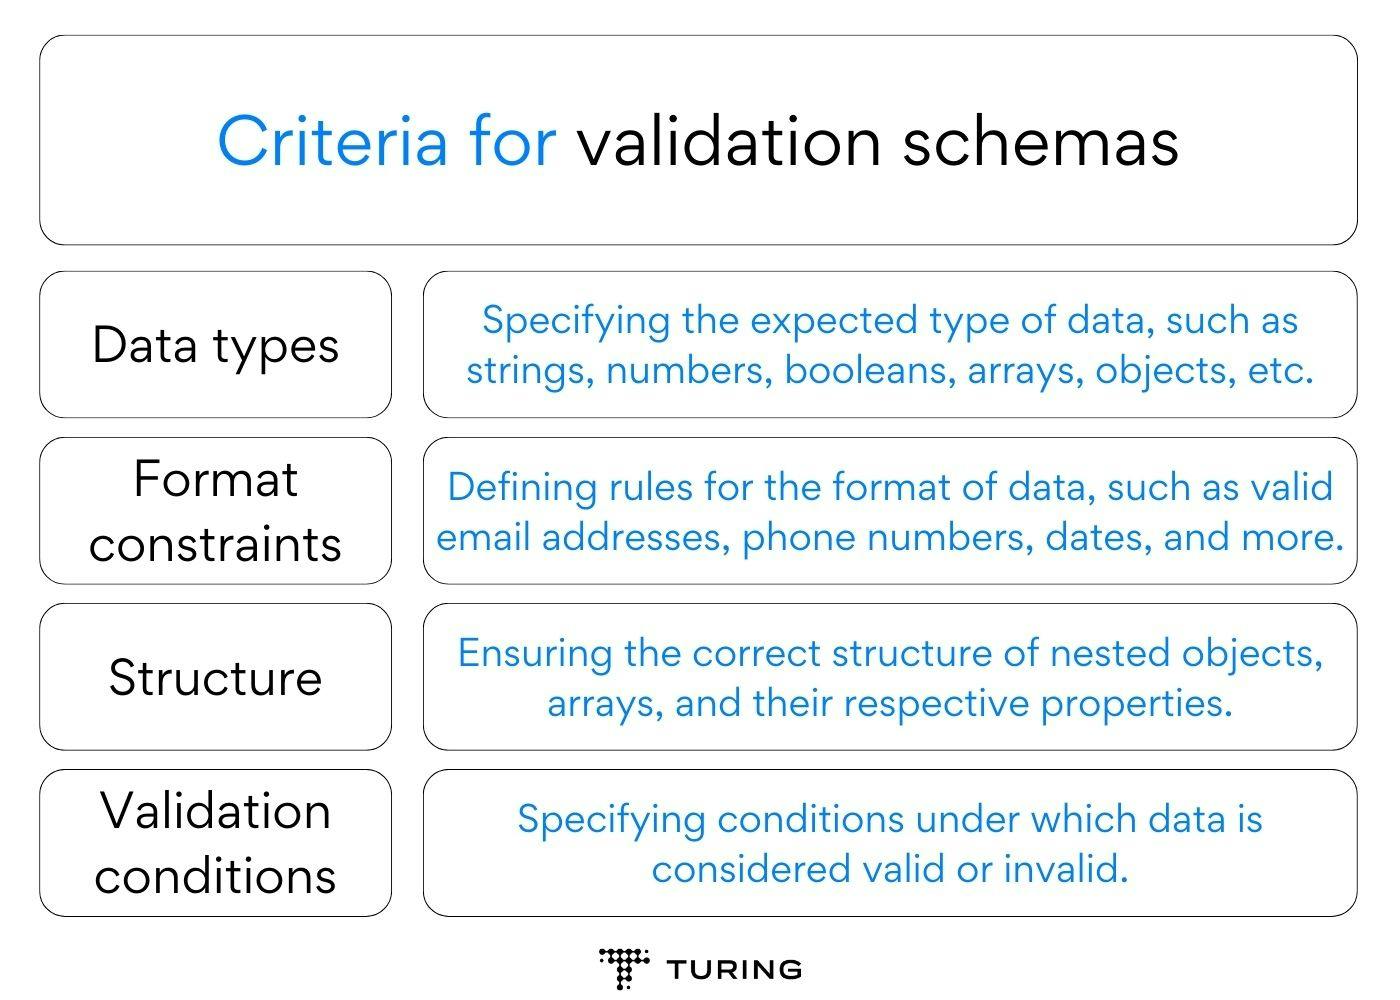 Zod validation: Criteria for validation schemas